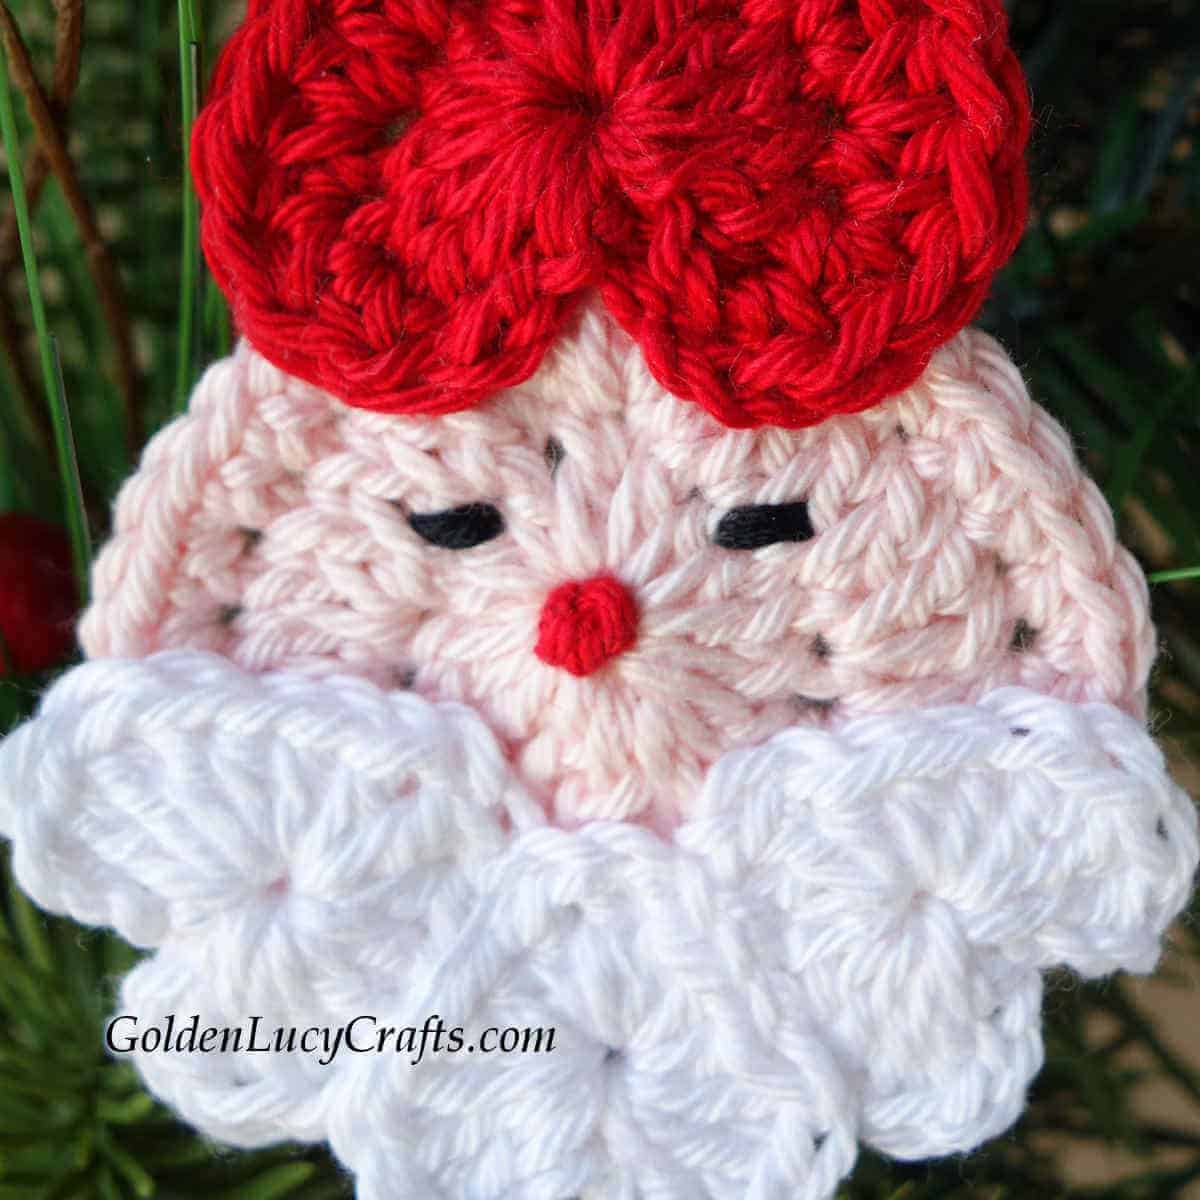 Santa crochet Christmas ornament close up picture.